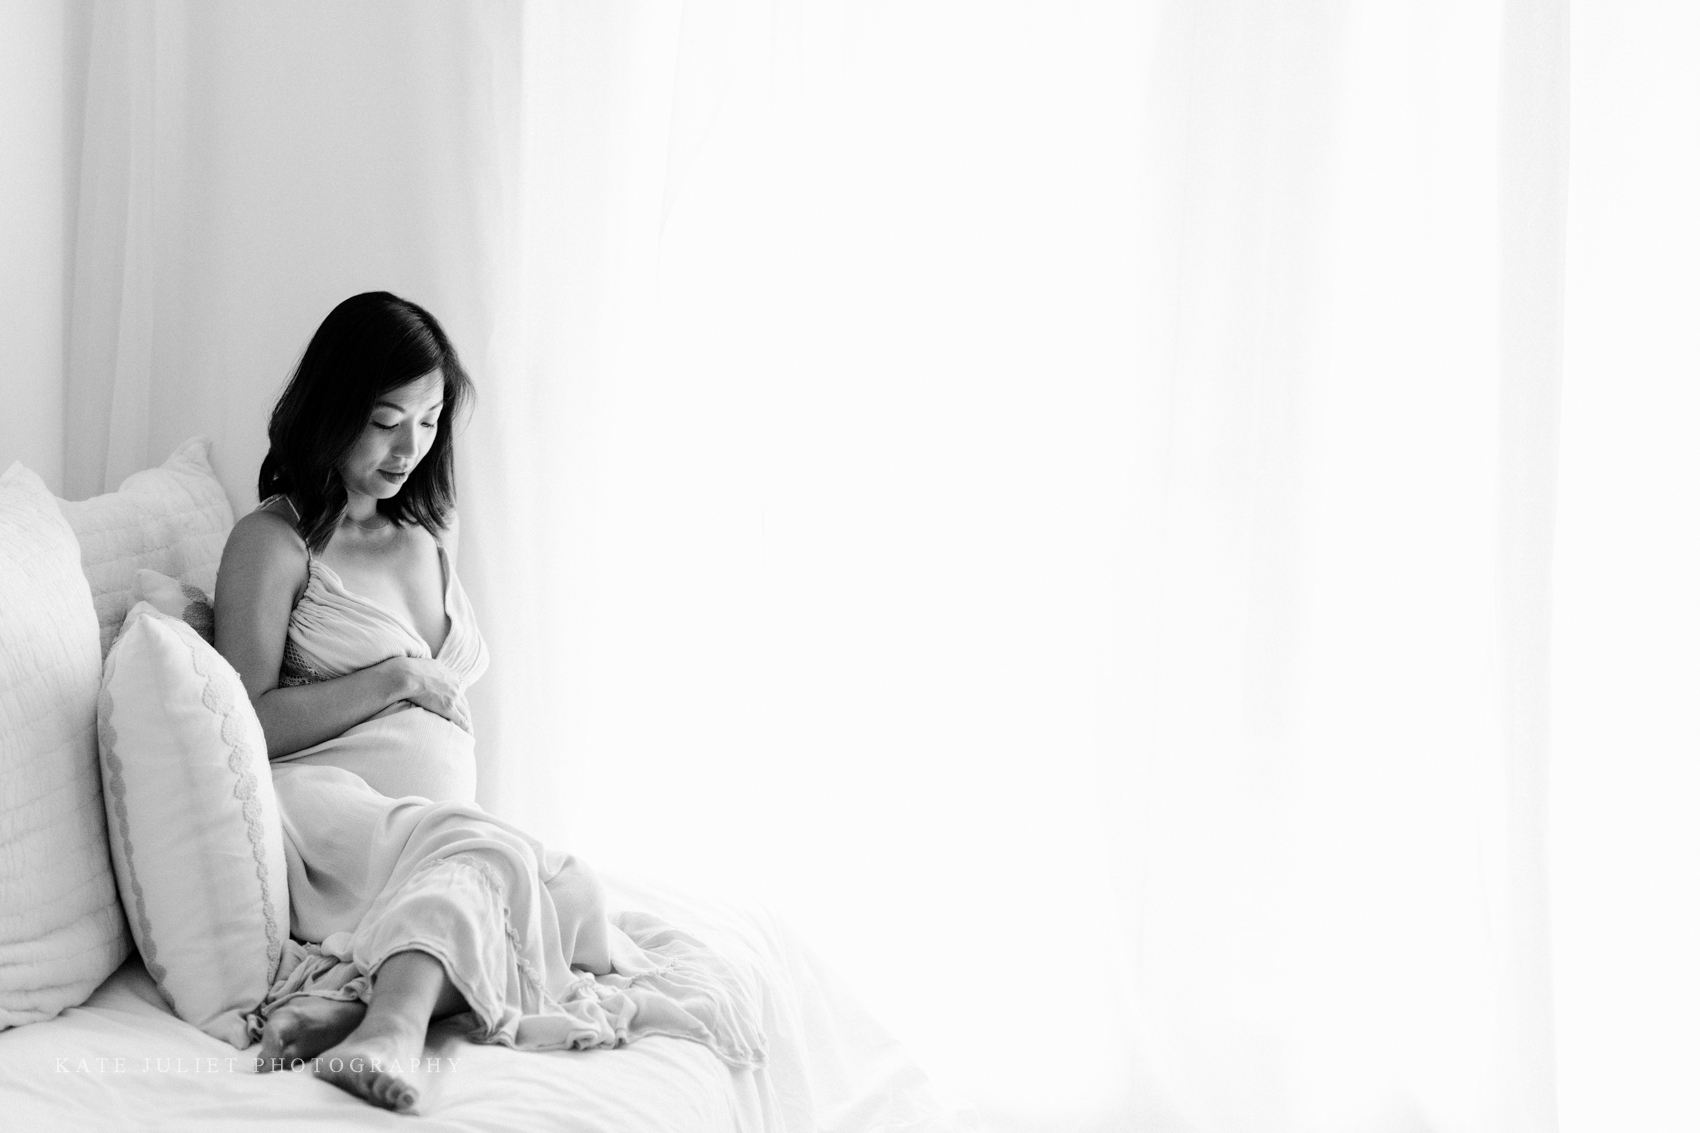 kate_juliet_photography-maternity-web-22.jpg